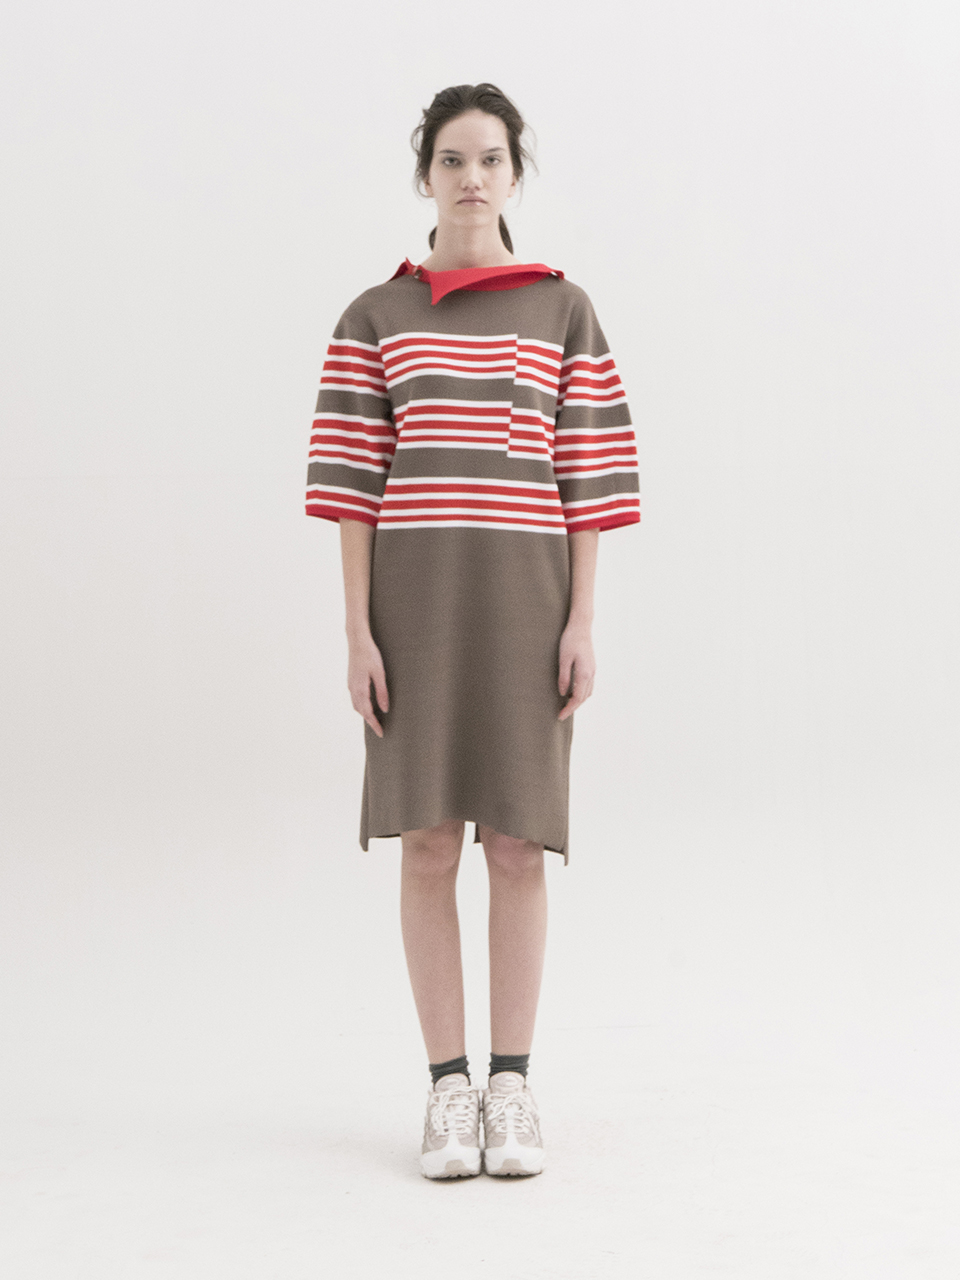 [Stripe Dress with Asymmetric Collar